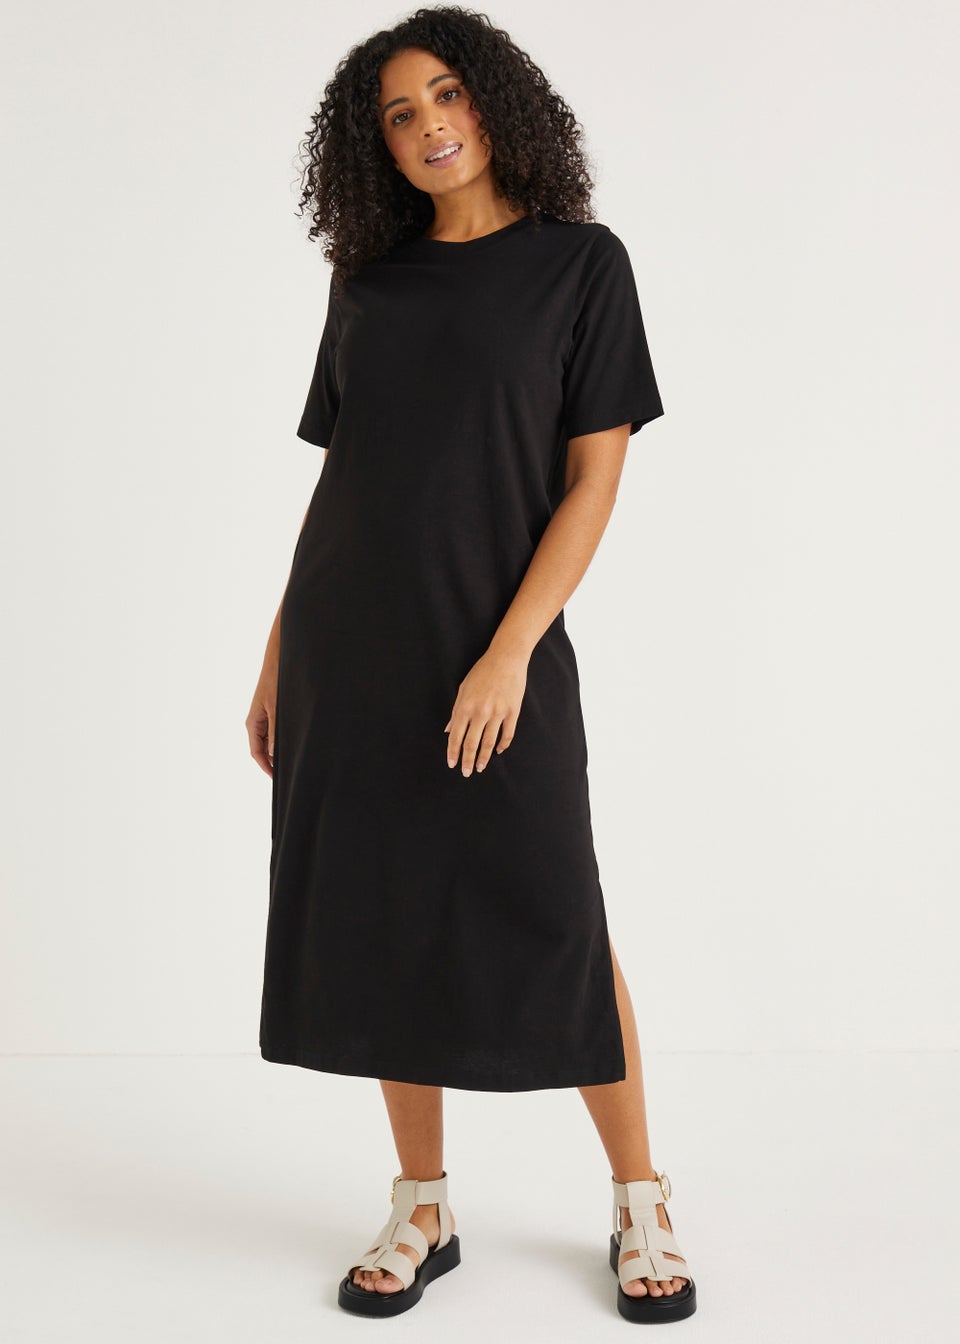 Black Jersey T-Shirt Dress - Matalan